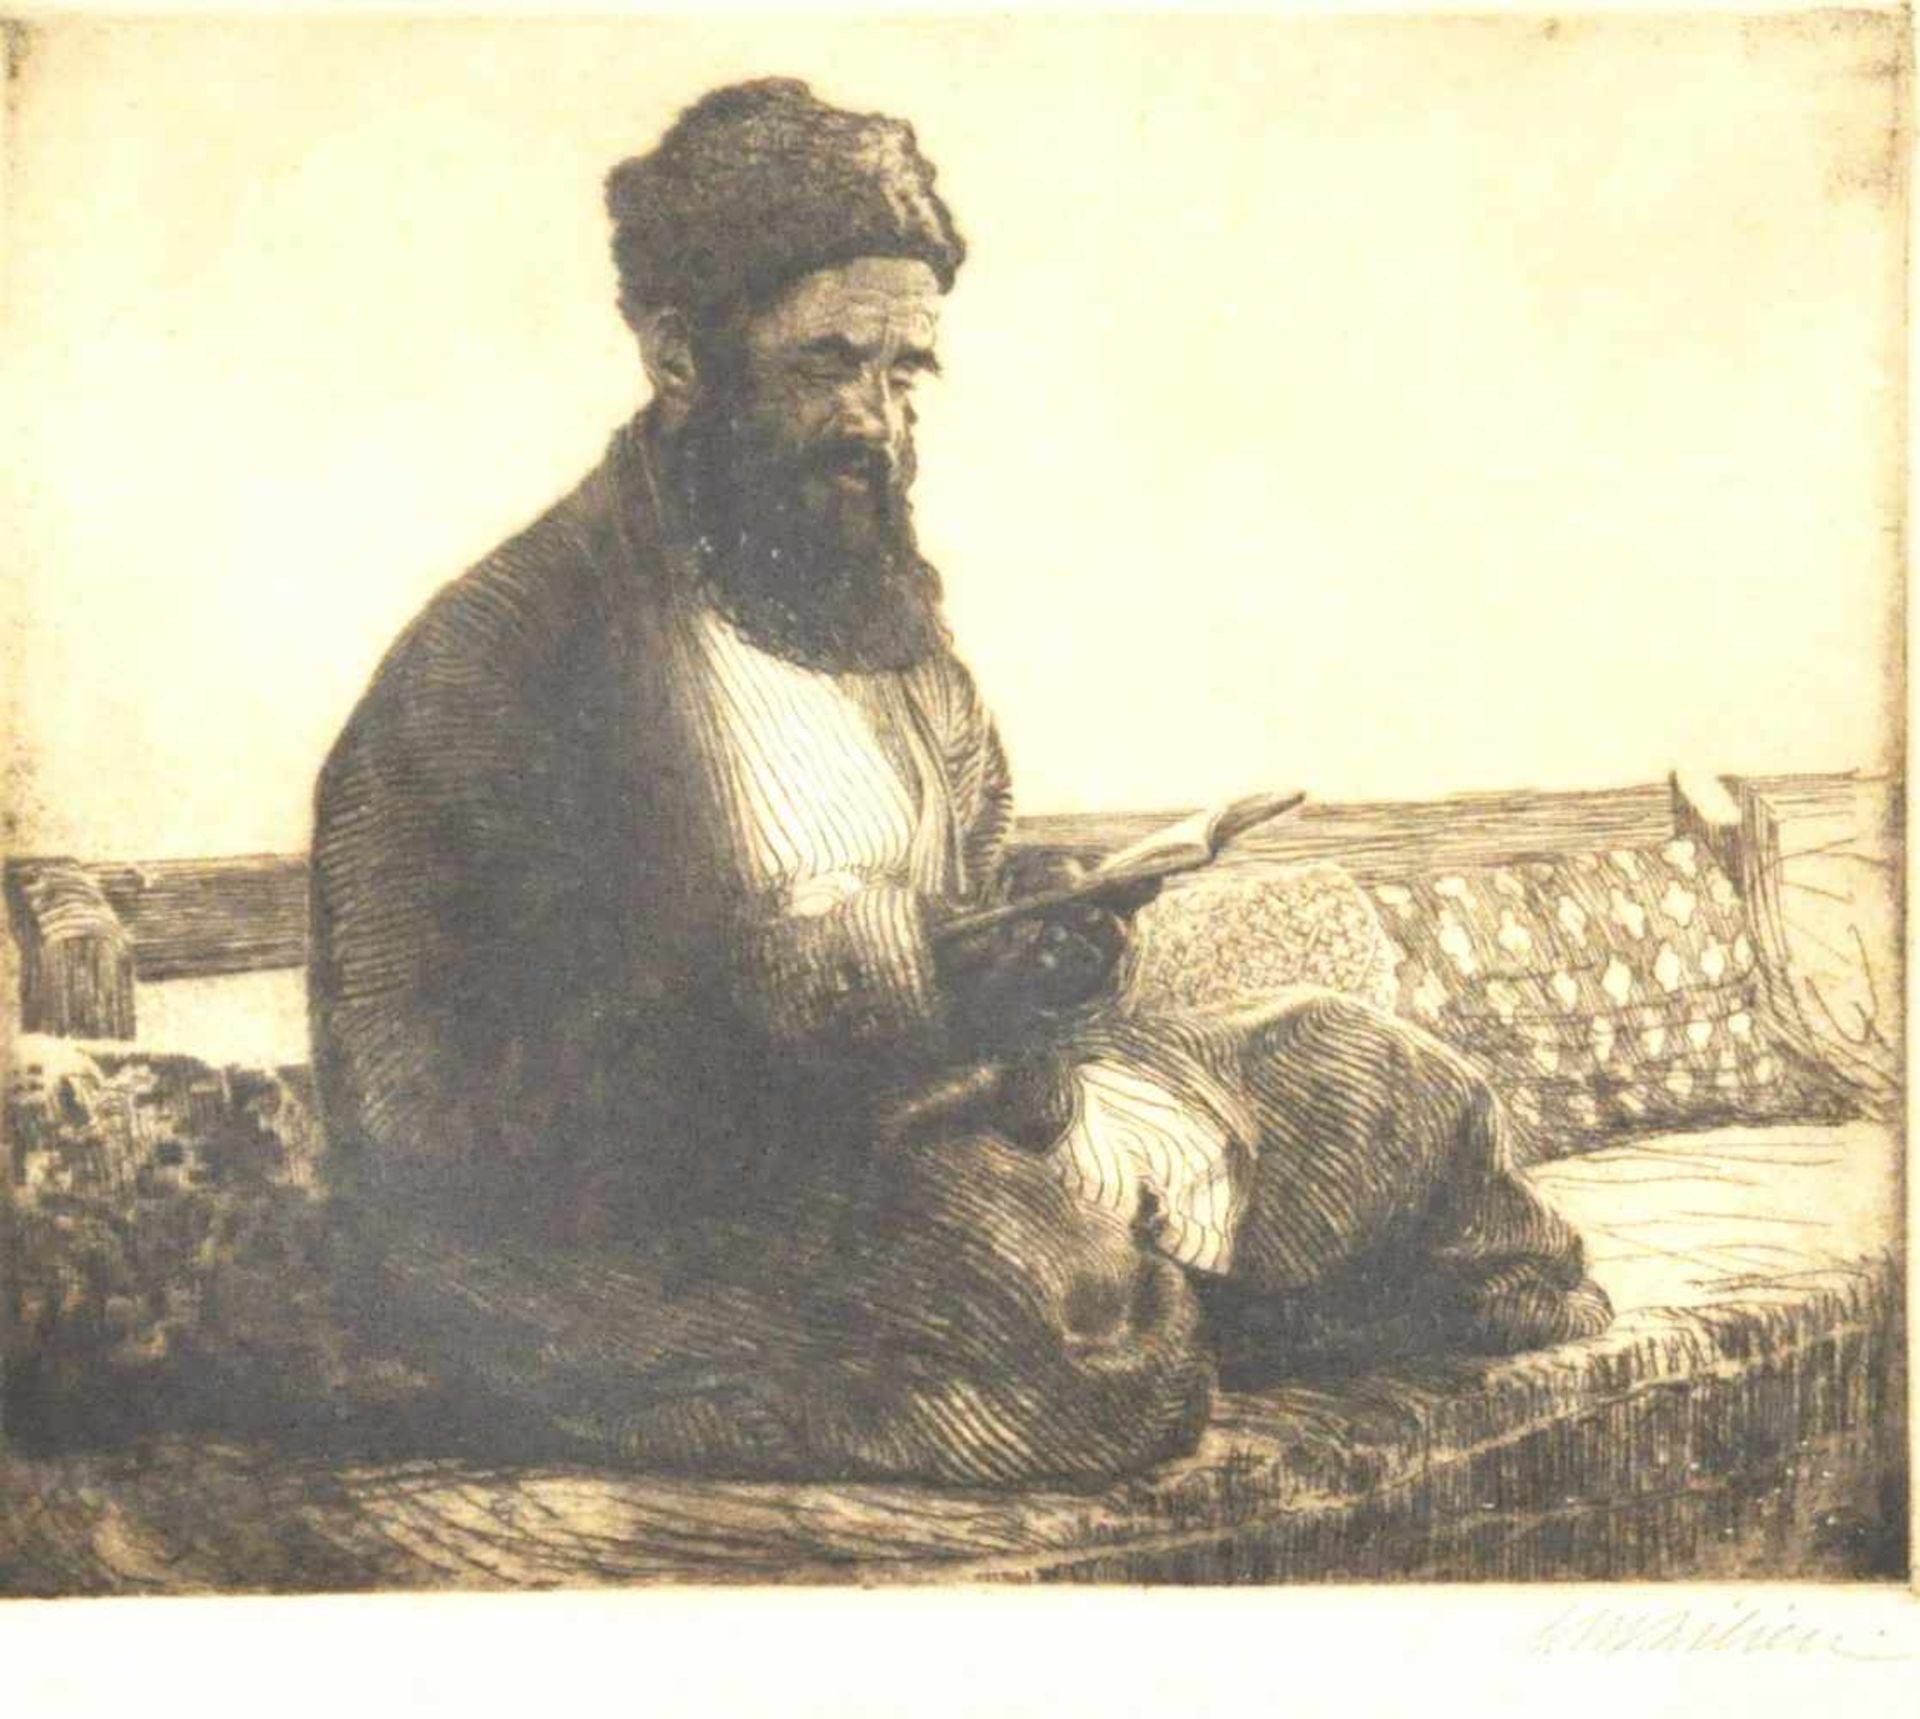 Lilien, Moshe E. (1874 - 1925)"Jüdischer Bucharer beim Lesen", Radierung, 26,5 x 32 cm, rechts unten